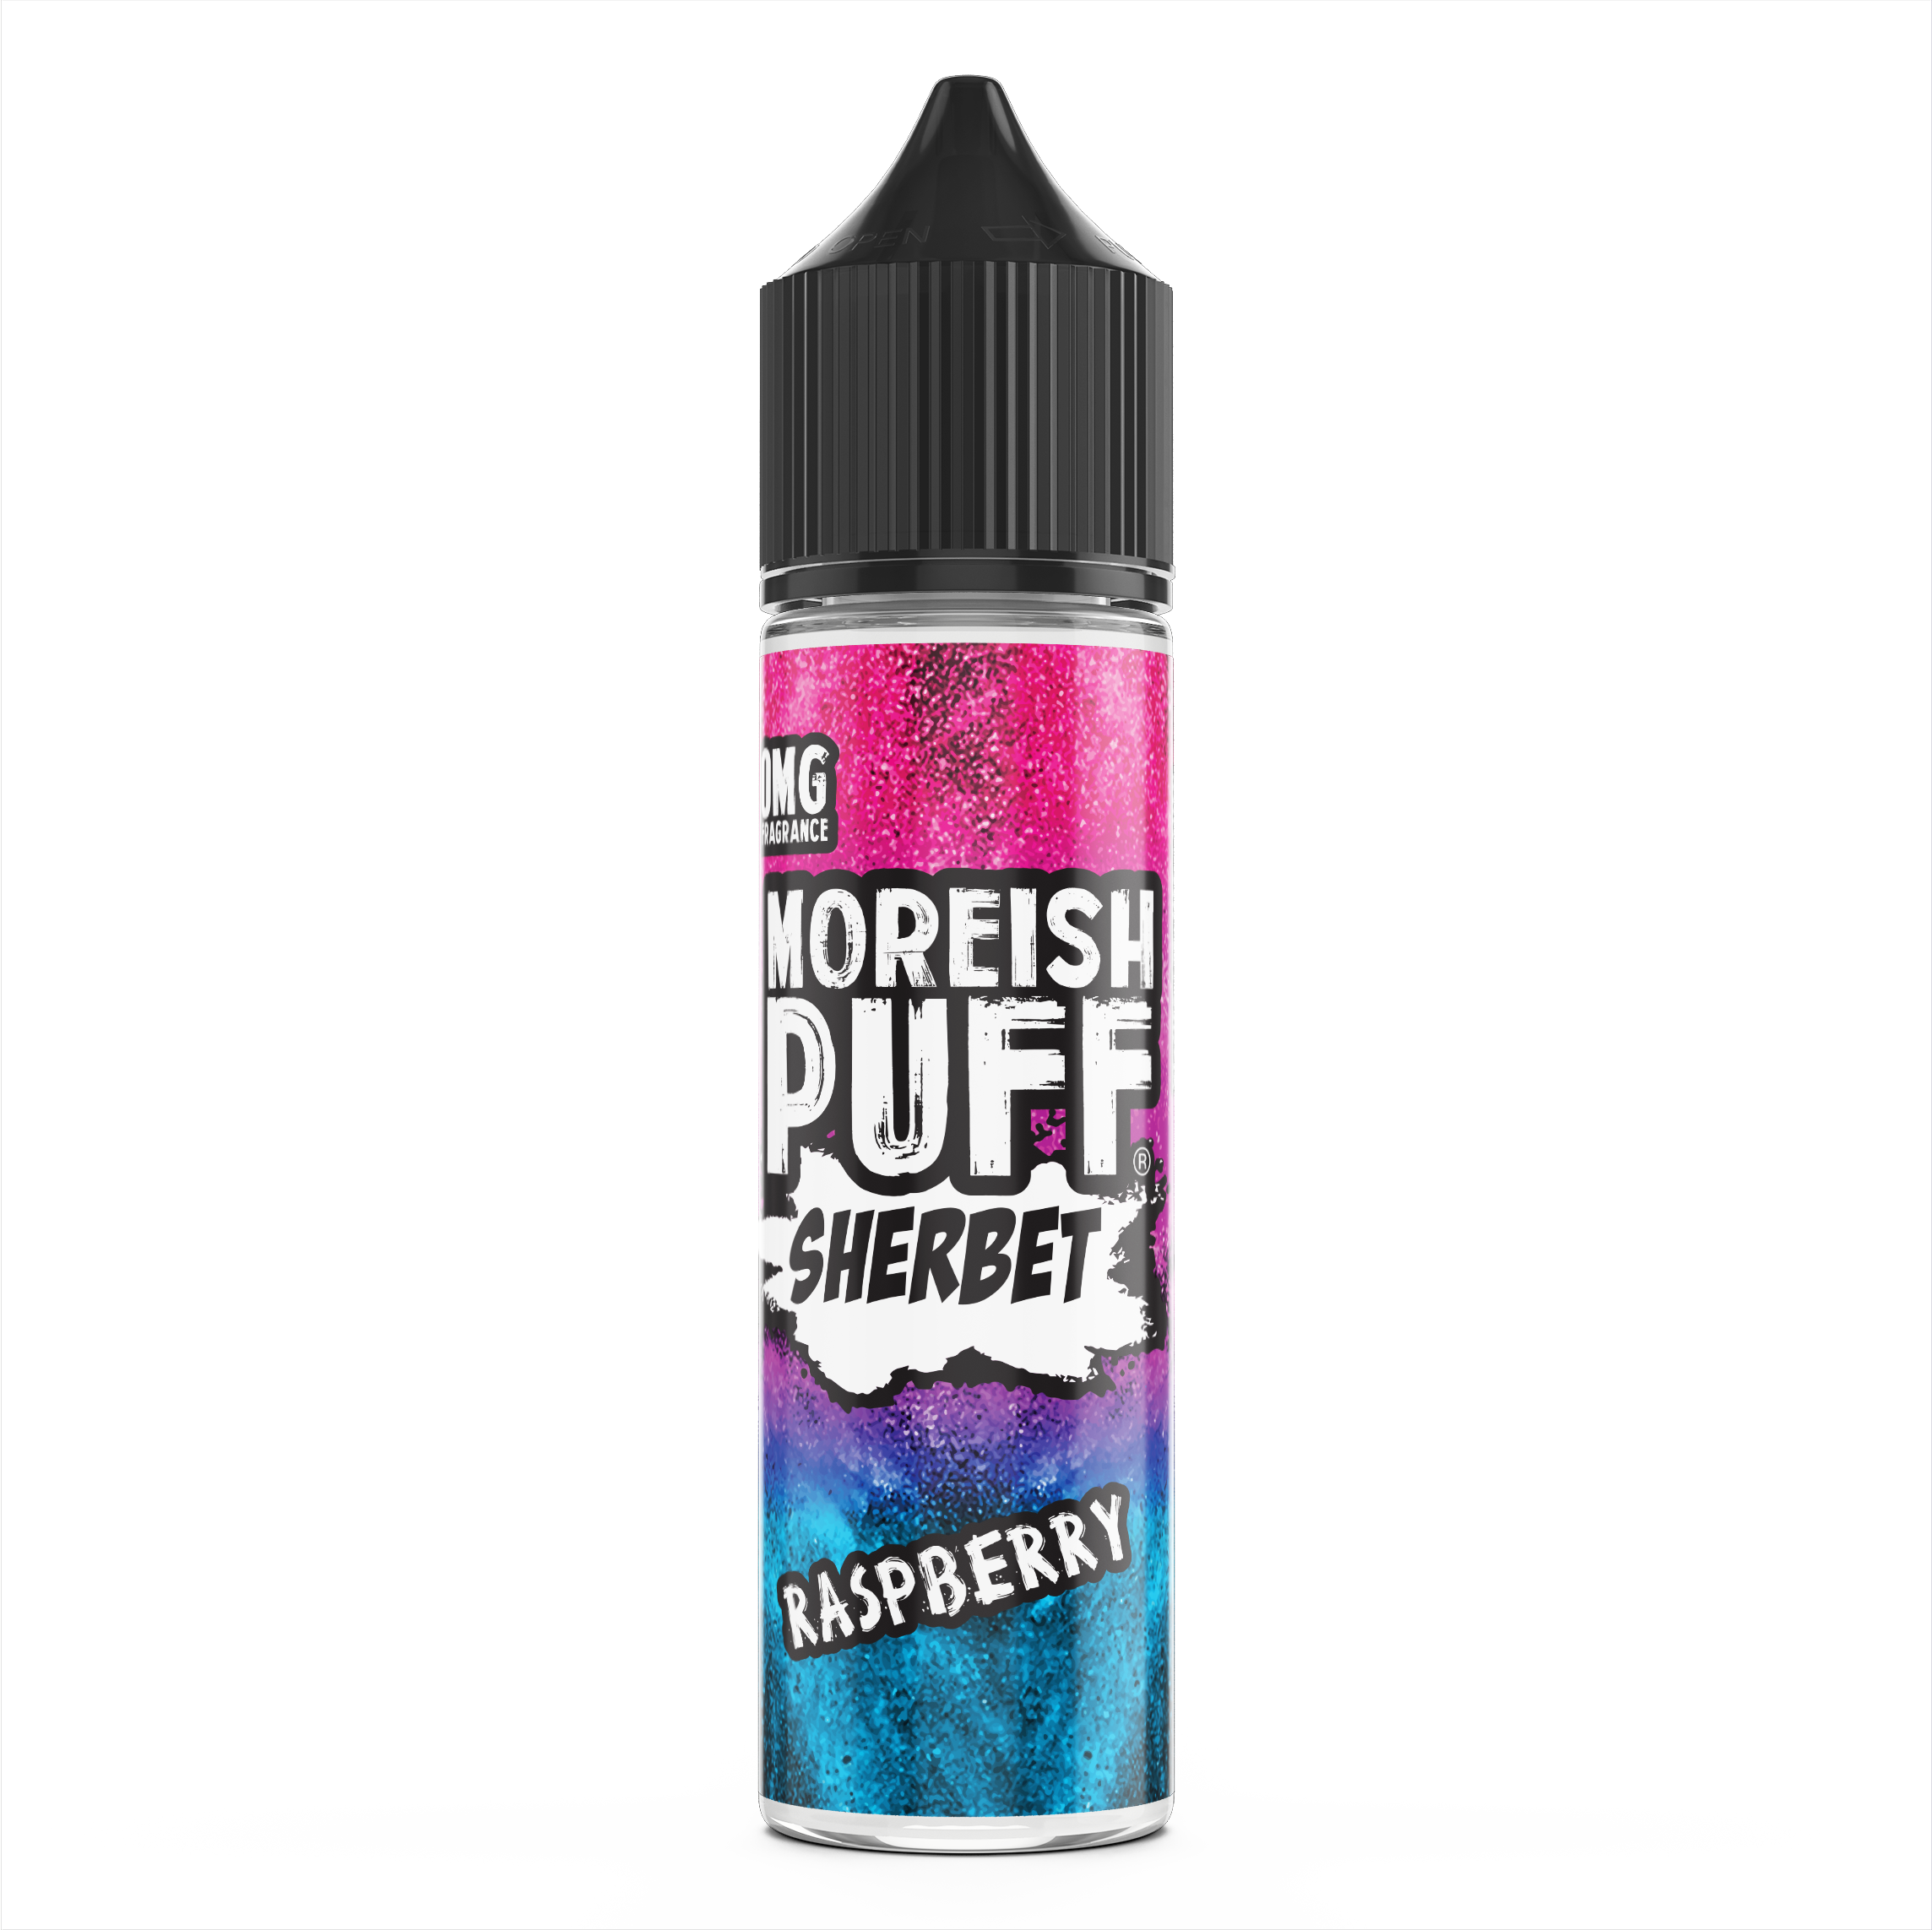 Moreish Puff Sherbet: Raspberry Sherbet 0mg 50ml Shortfill E-Liquid